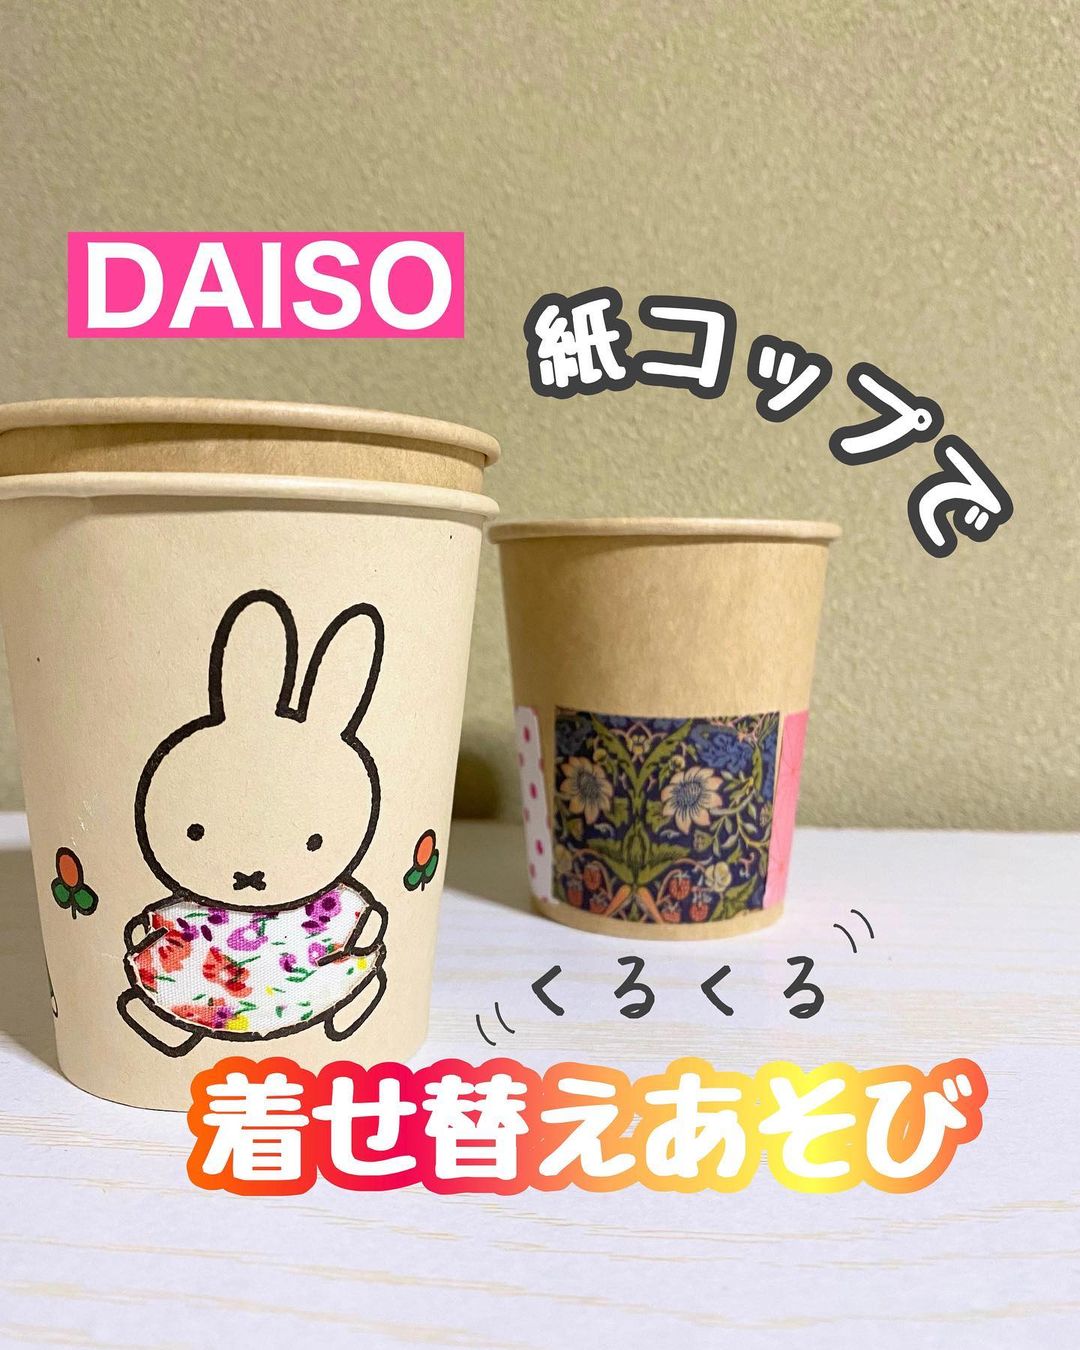 Daiso ダイソー 可愛すぎ 紙コップで簡単に着せ替えおもちゃに変身 リトル ママ Webリトル ママ Web